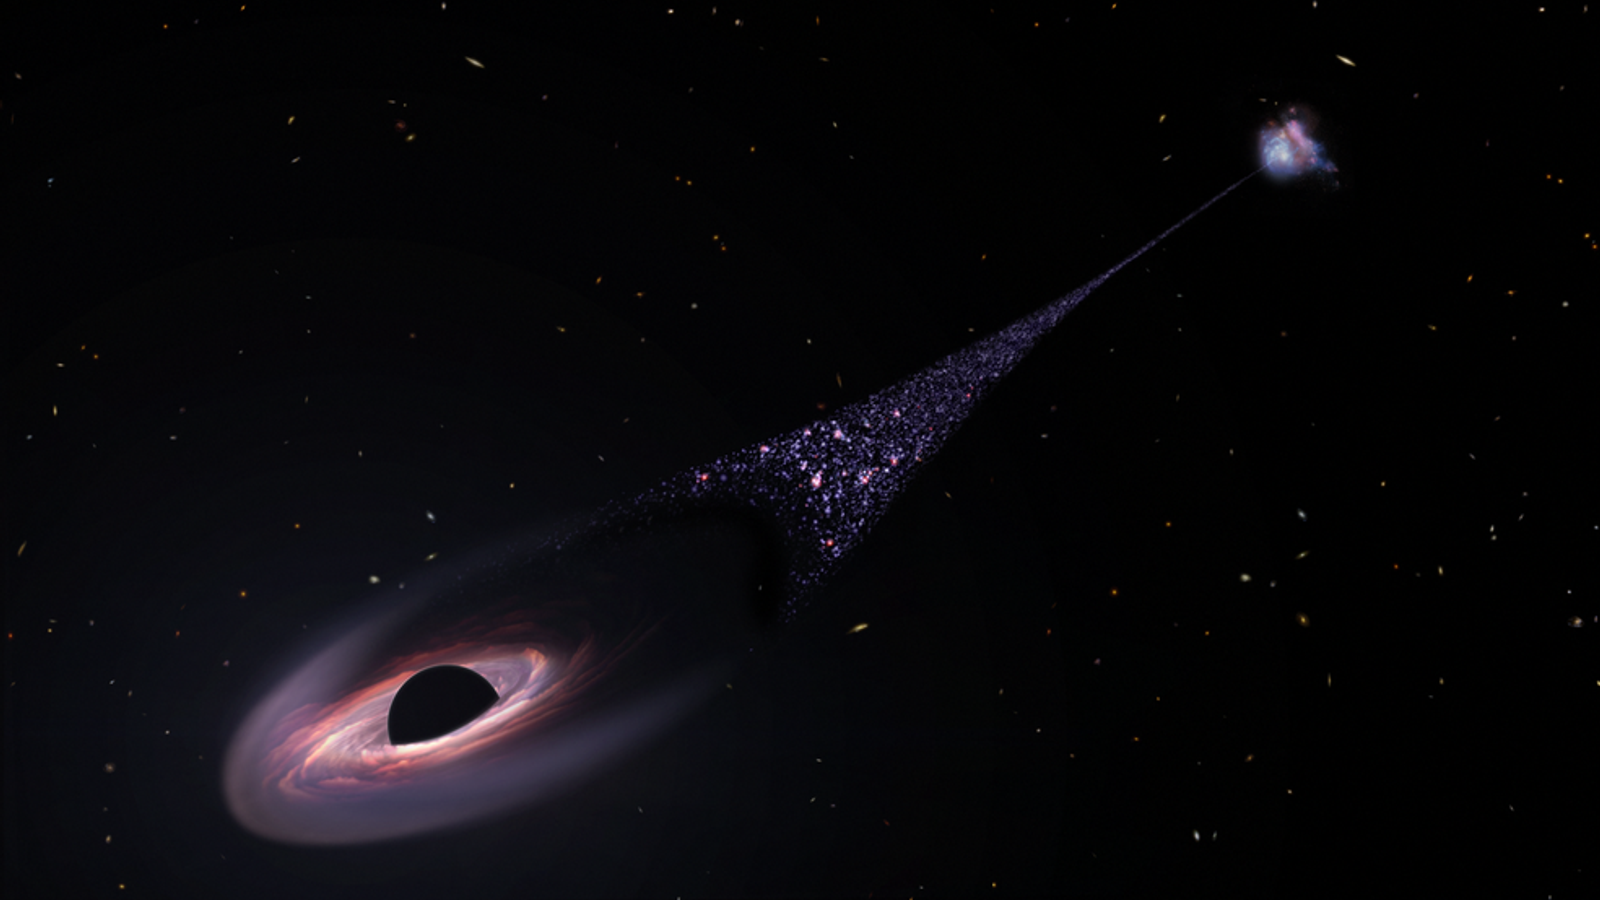 black hole 16ch